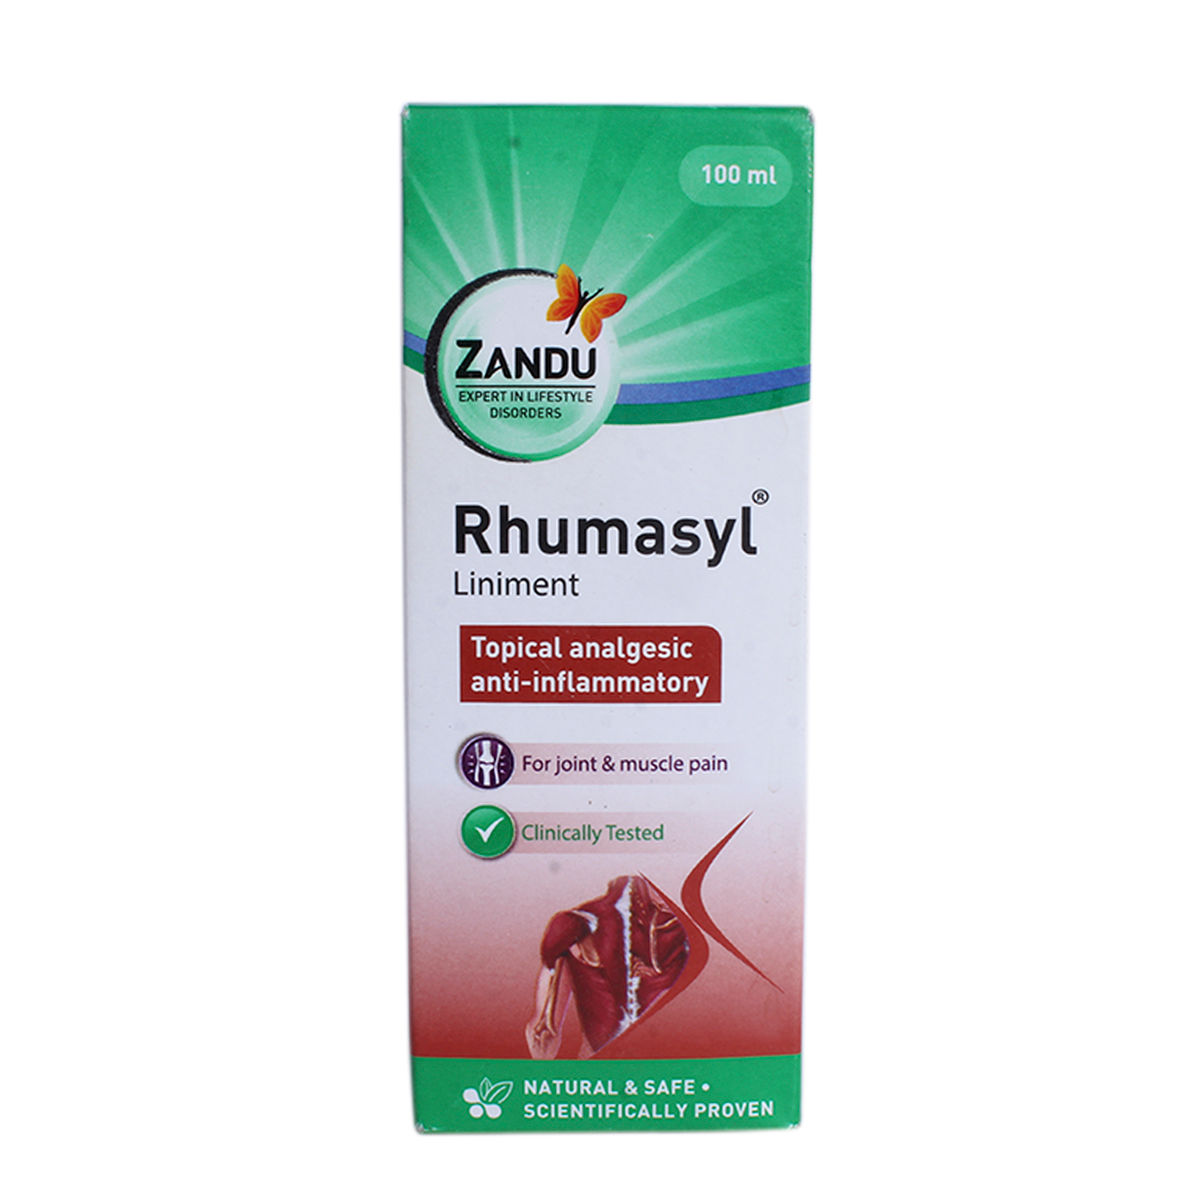 Buy Zandu Rhumasyl Liniment, 100 ml Online